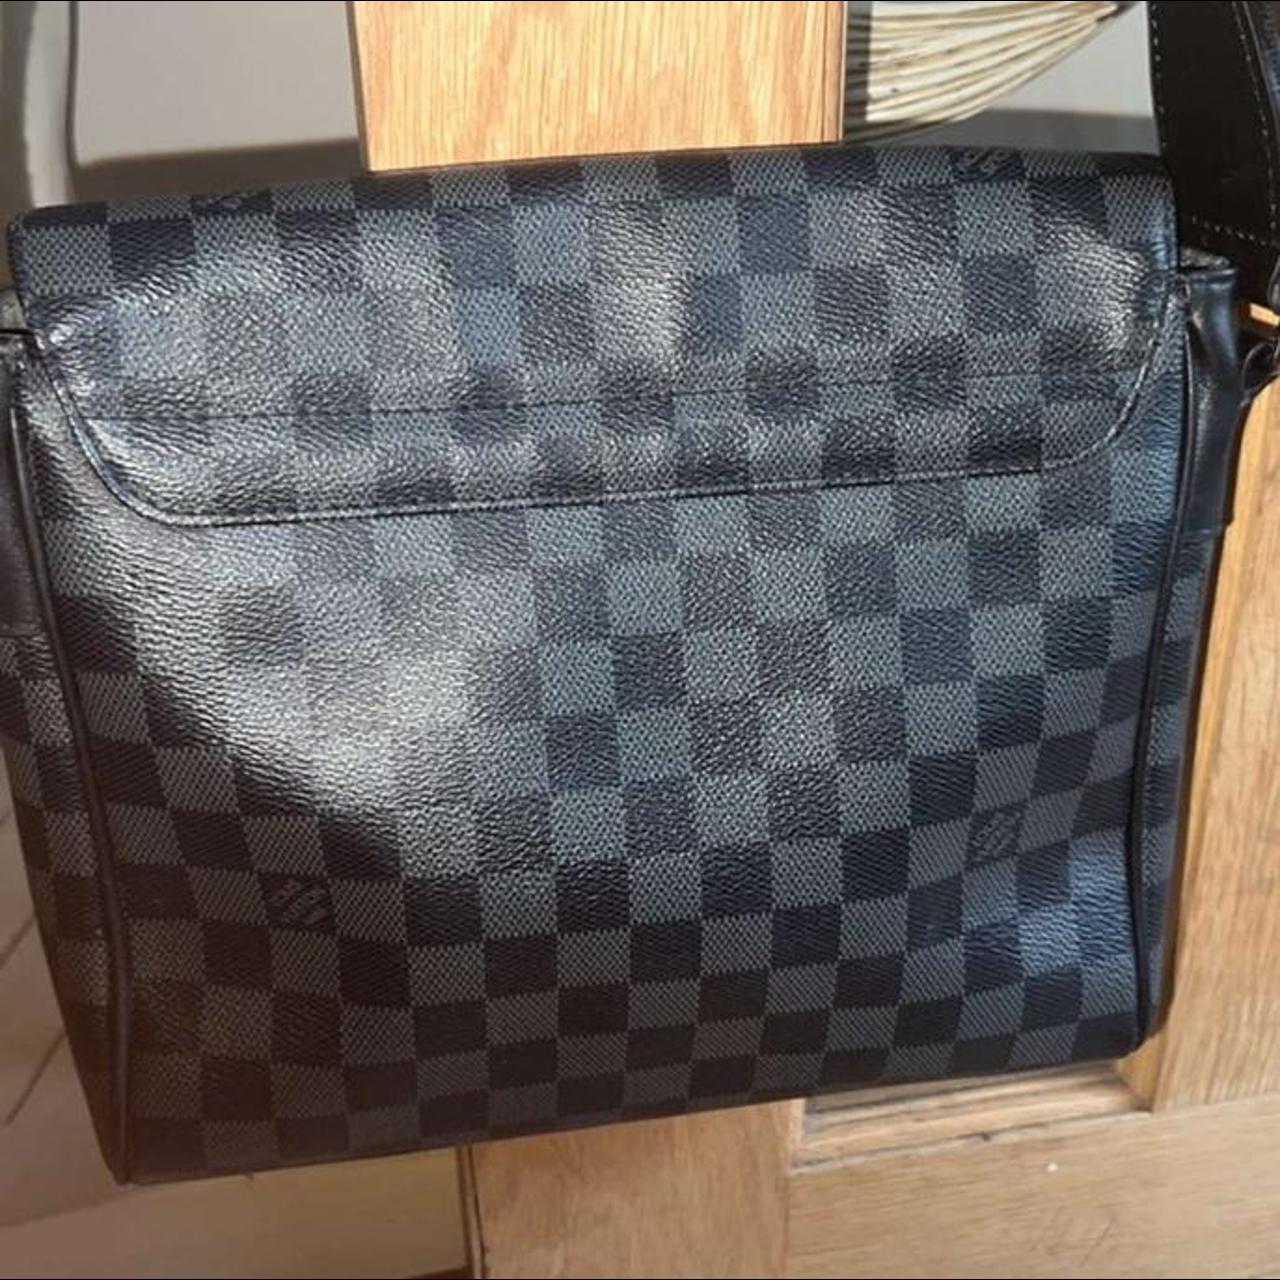 Louis Vuitton Black Damier Graphite Pattern Leather - Depop